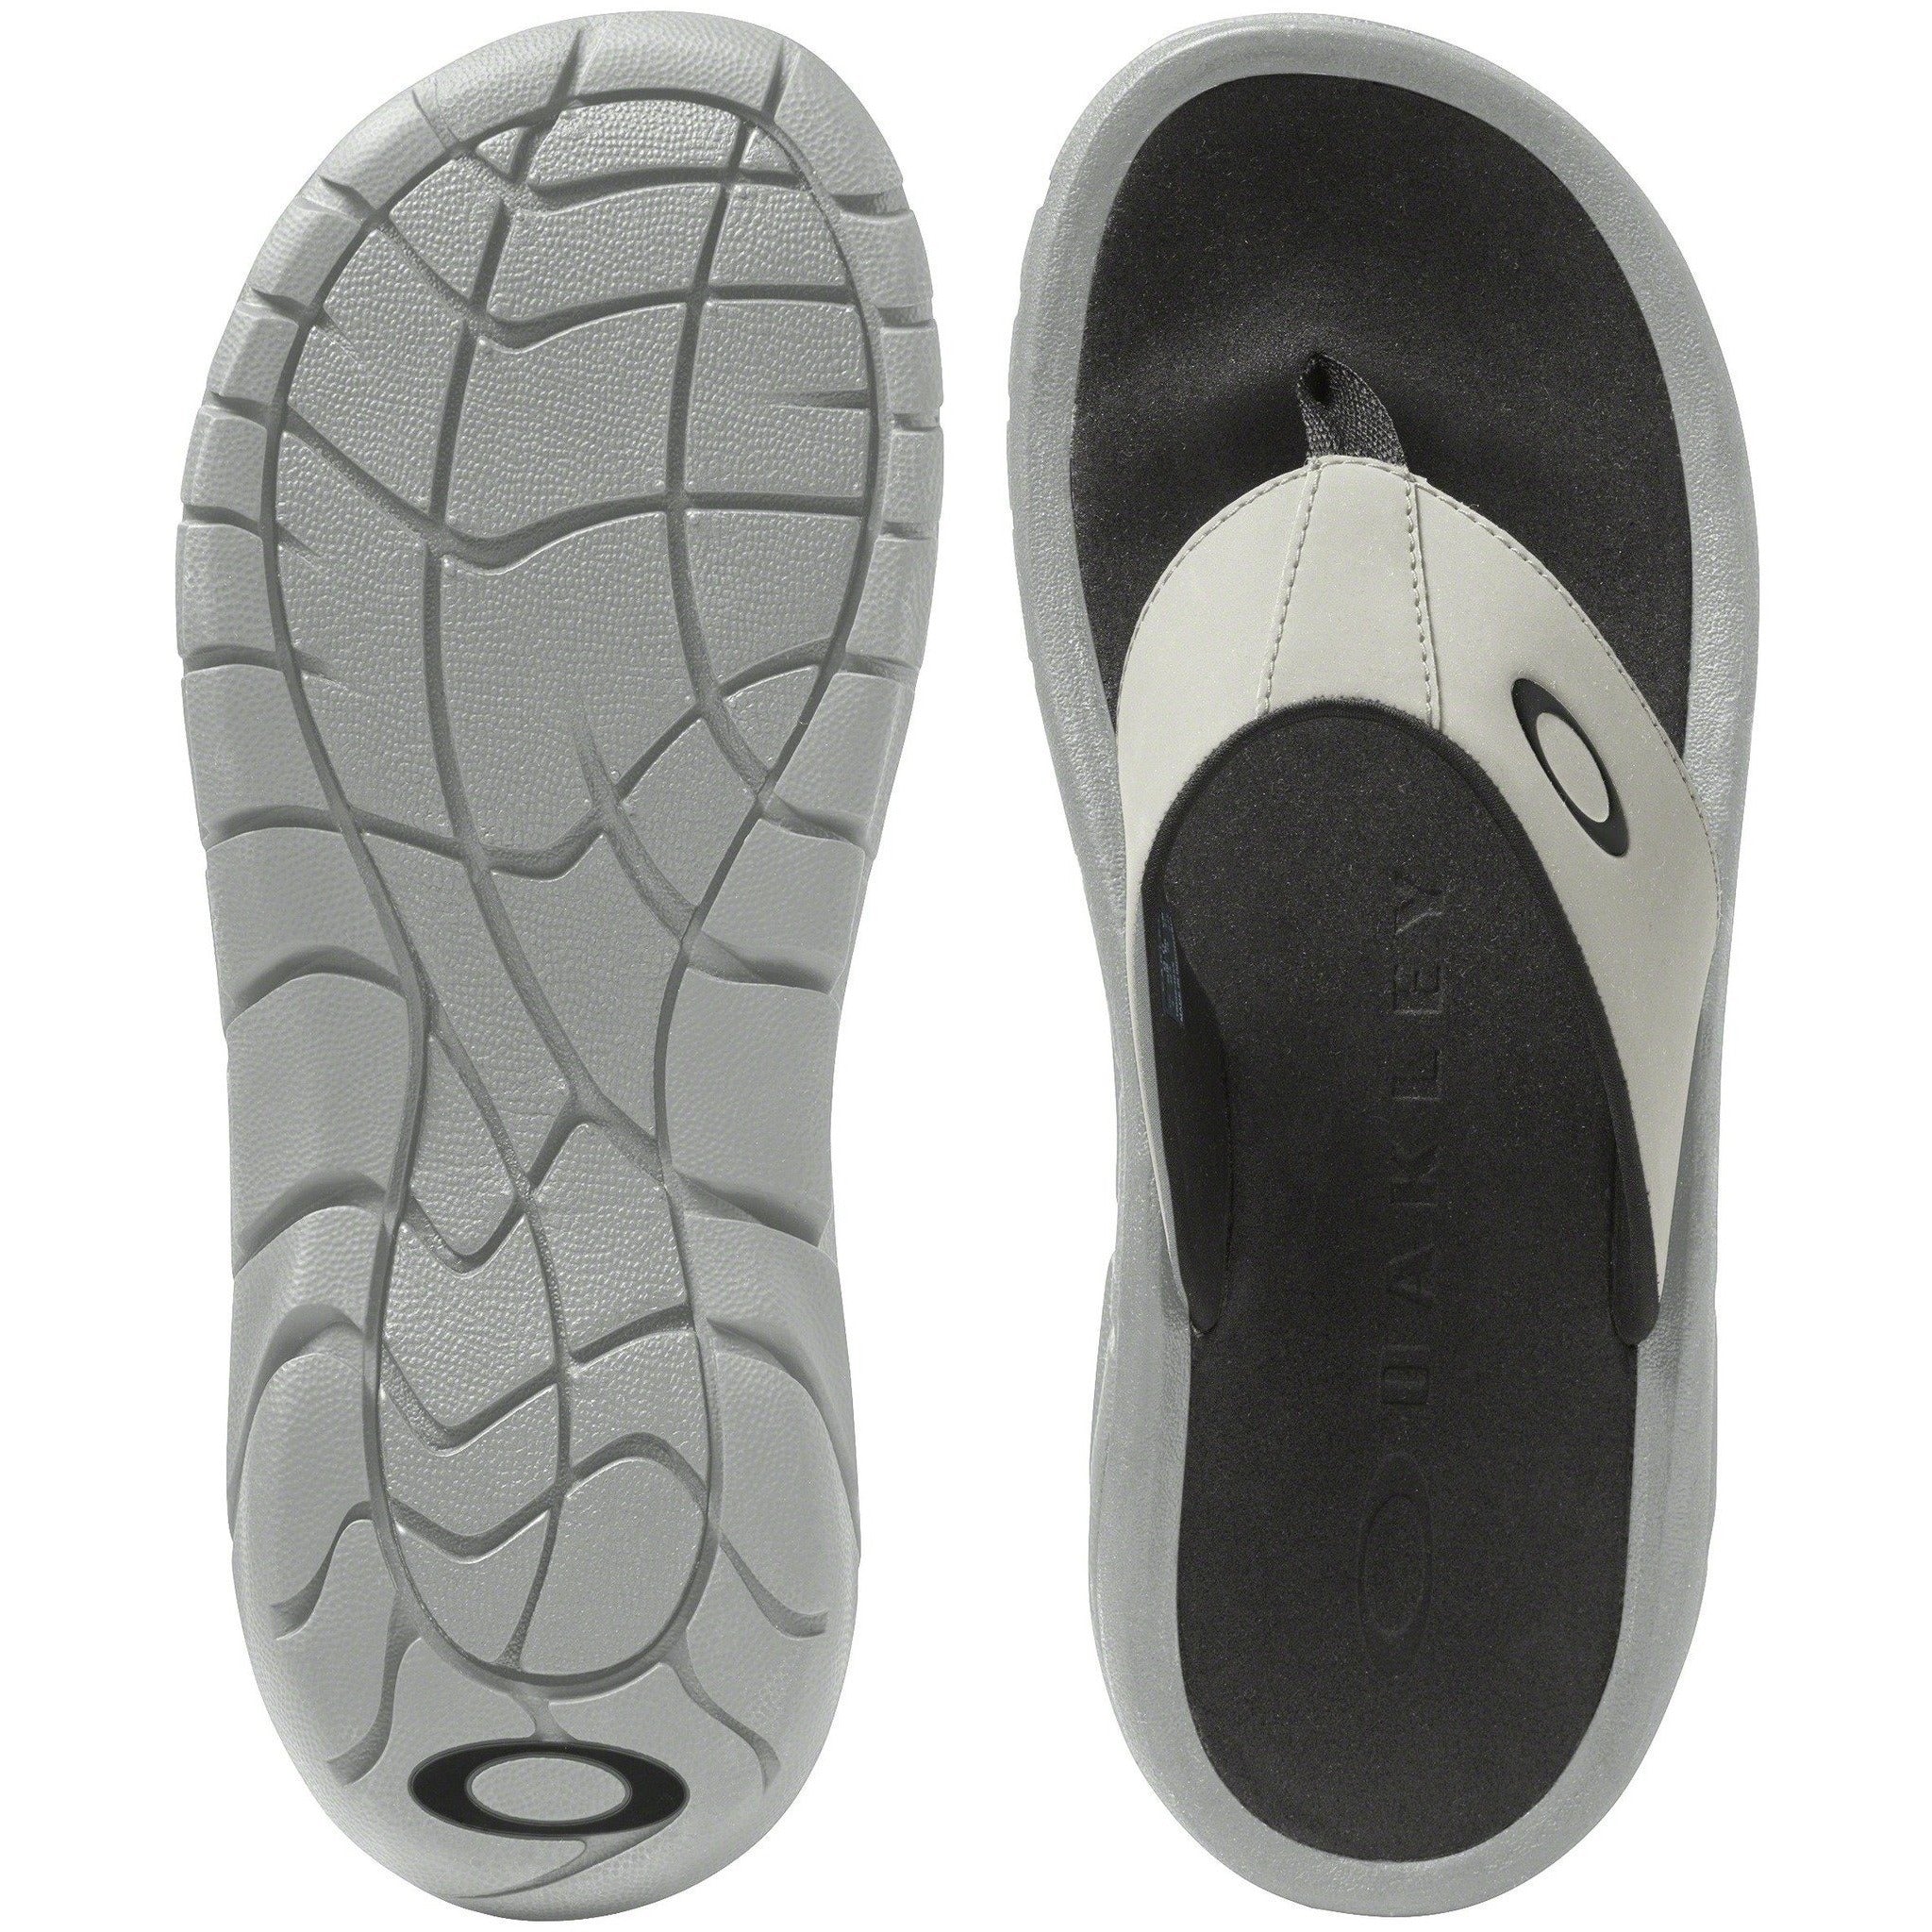 Oakley Super Coil Sandals 2.0 - 88 Gear